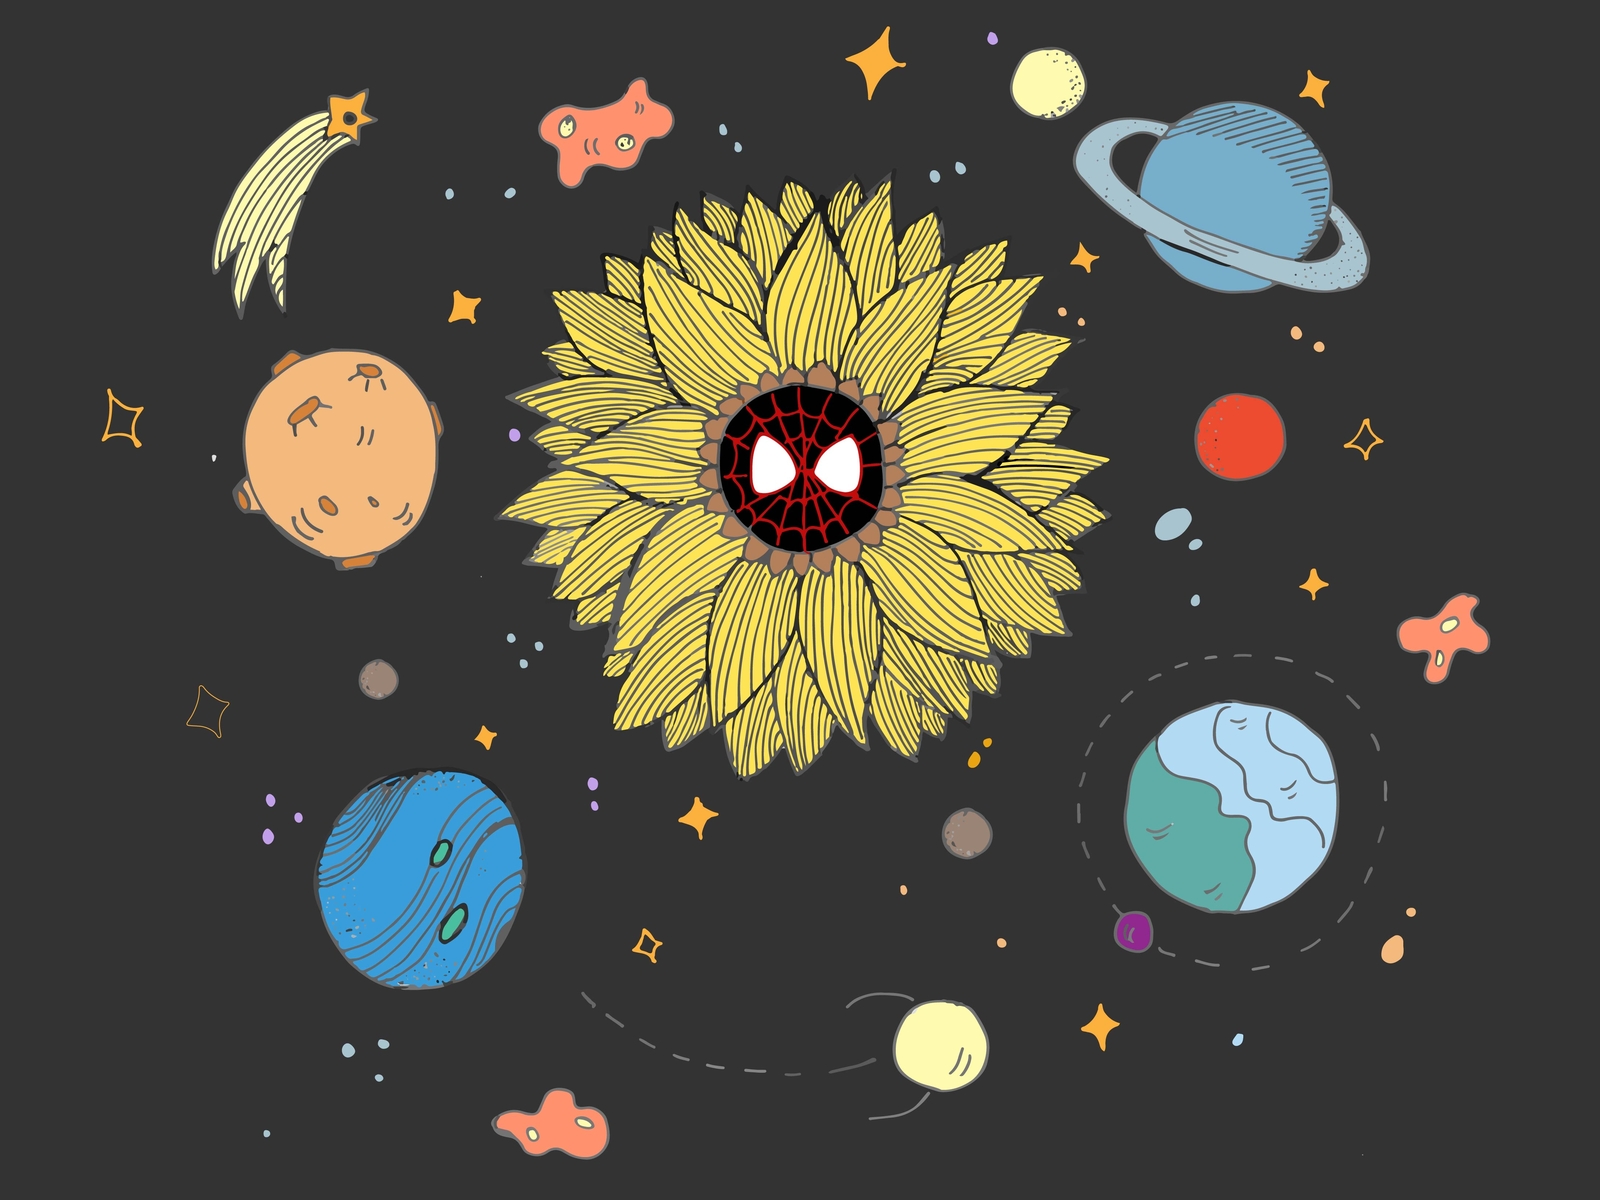 Sunflower (Spider-Man) Album Cover by Swapnil Karnwal on Dribbble